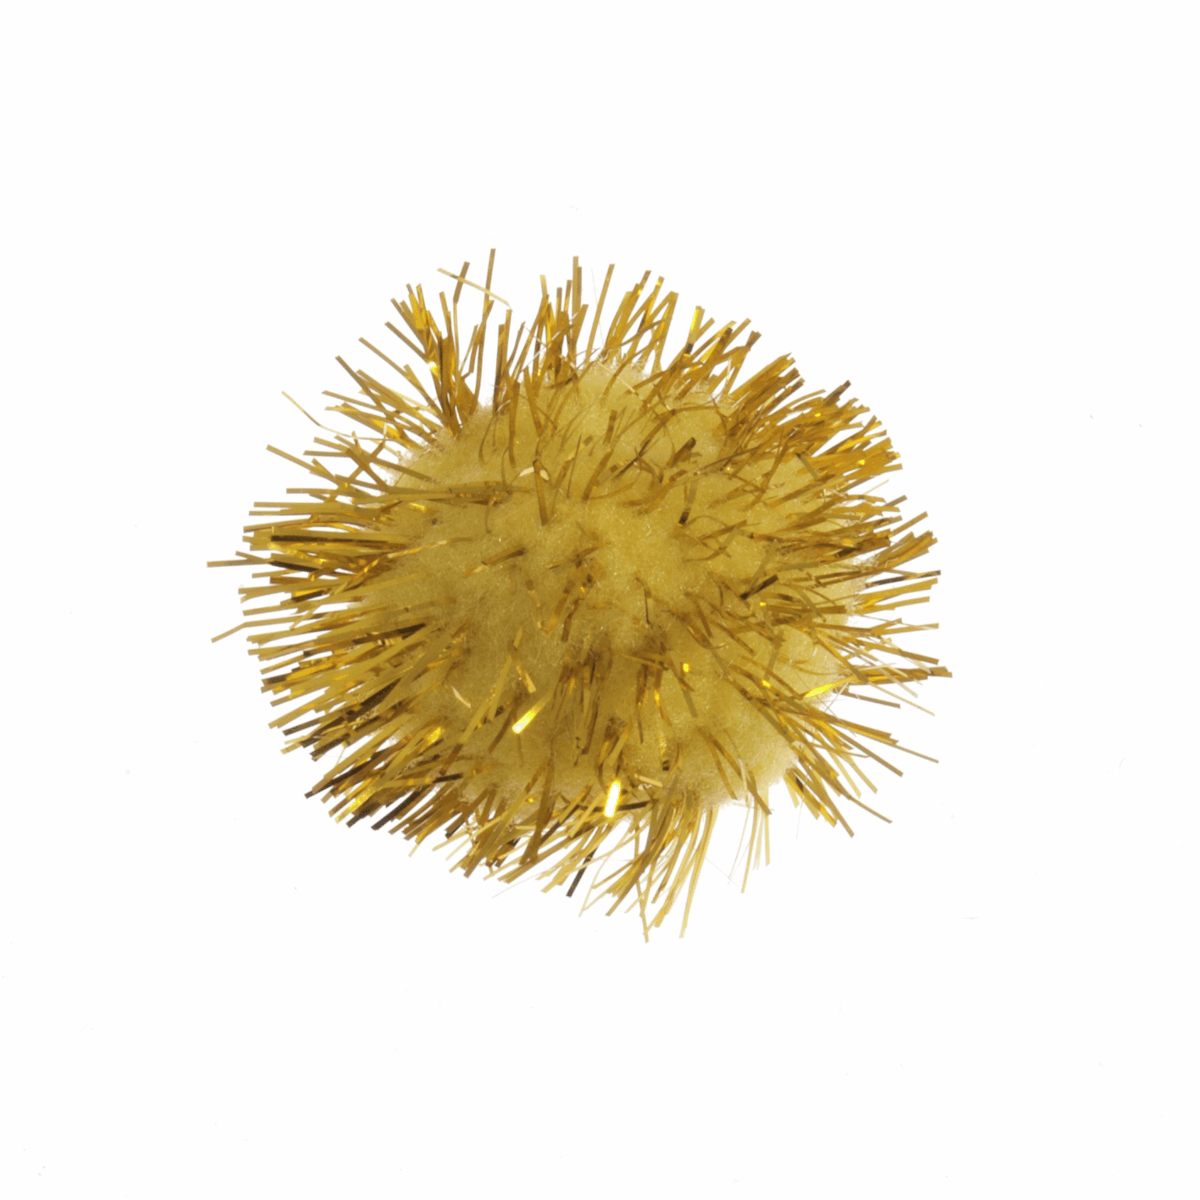 Trimits Gold Glitter Pom Poms - 2.5cm / 1inch (Pack of 8)